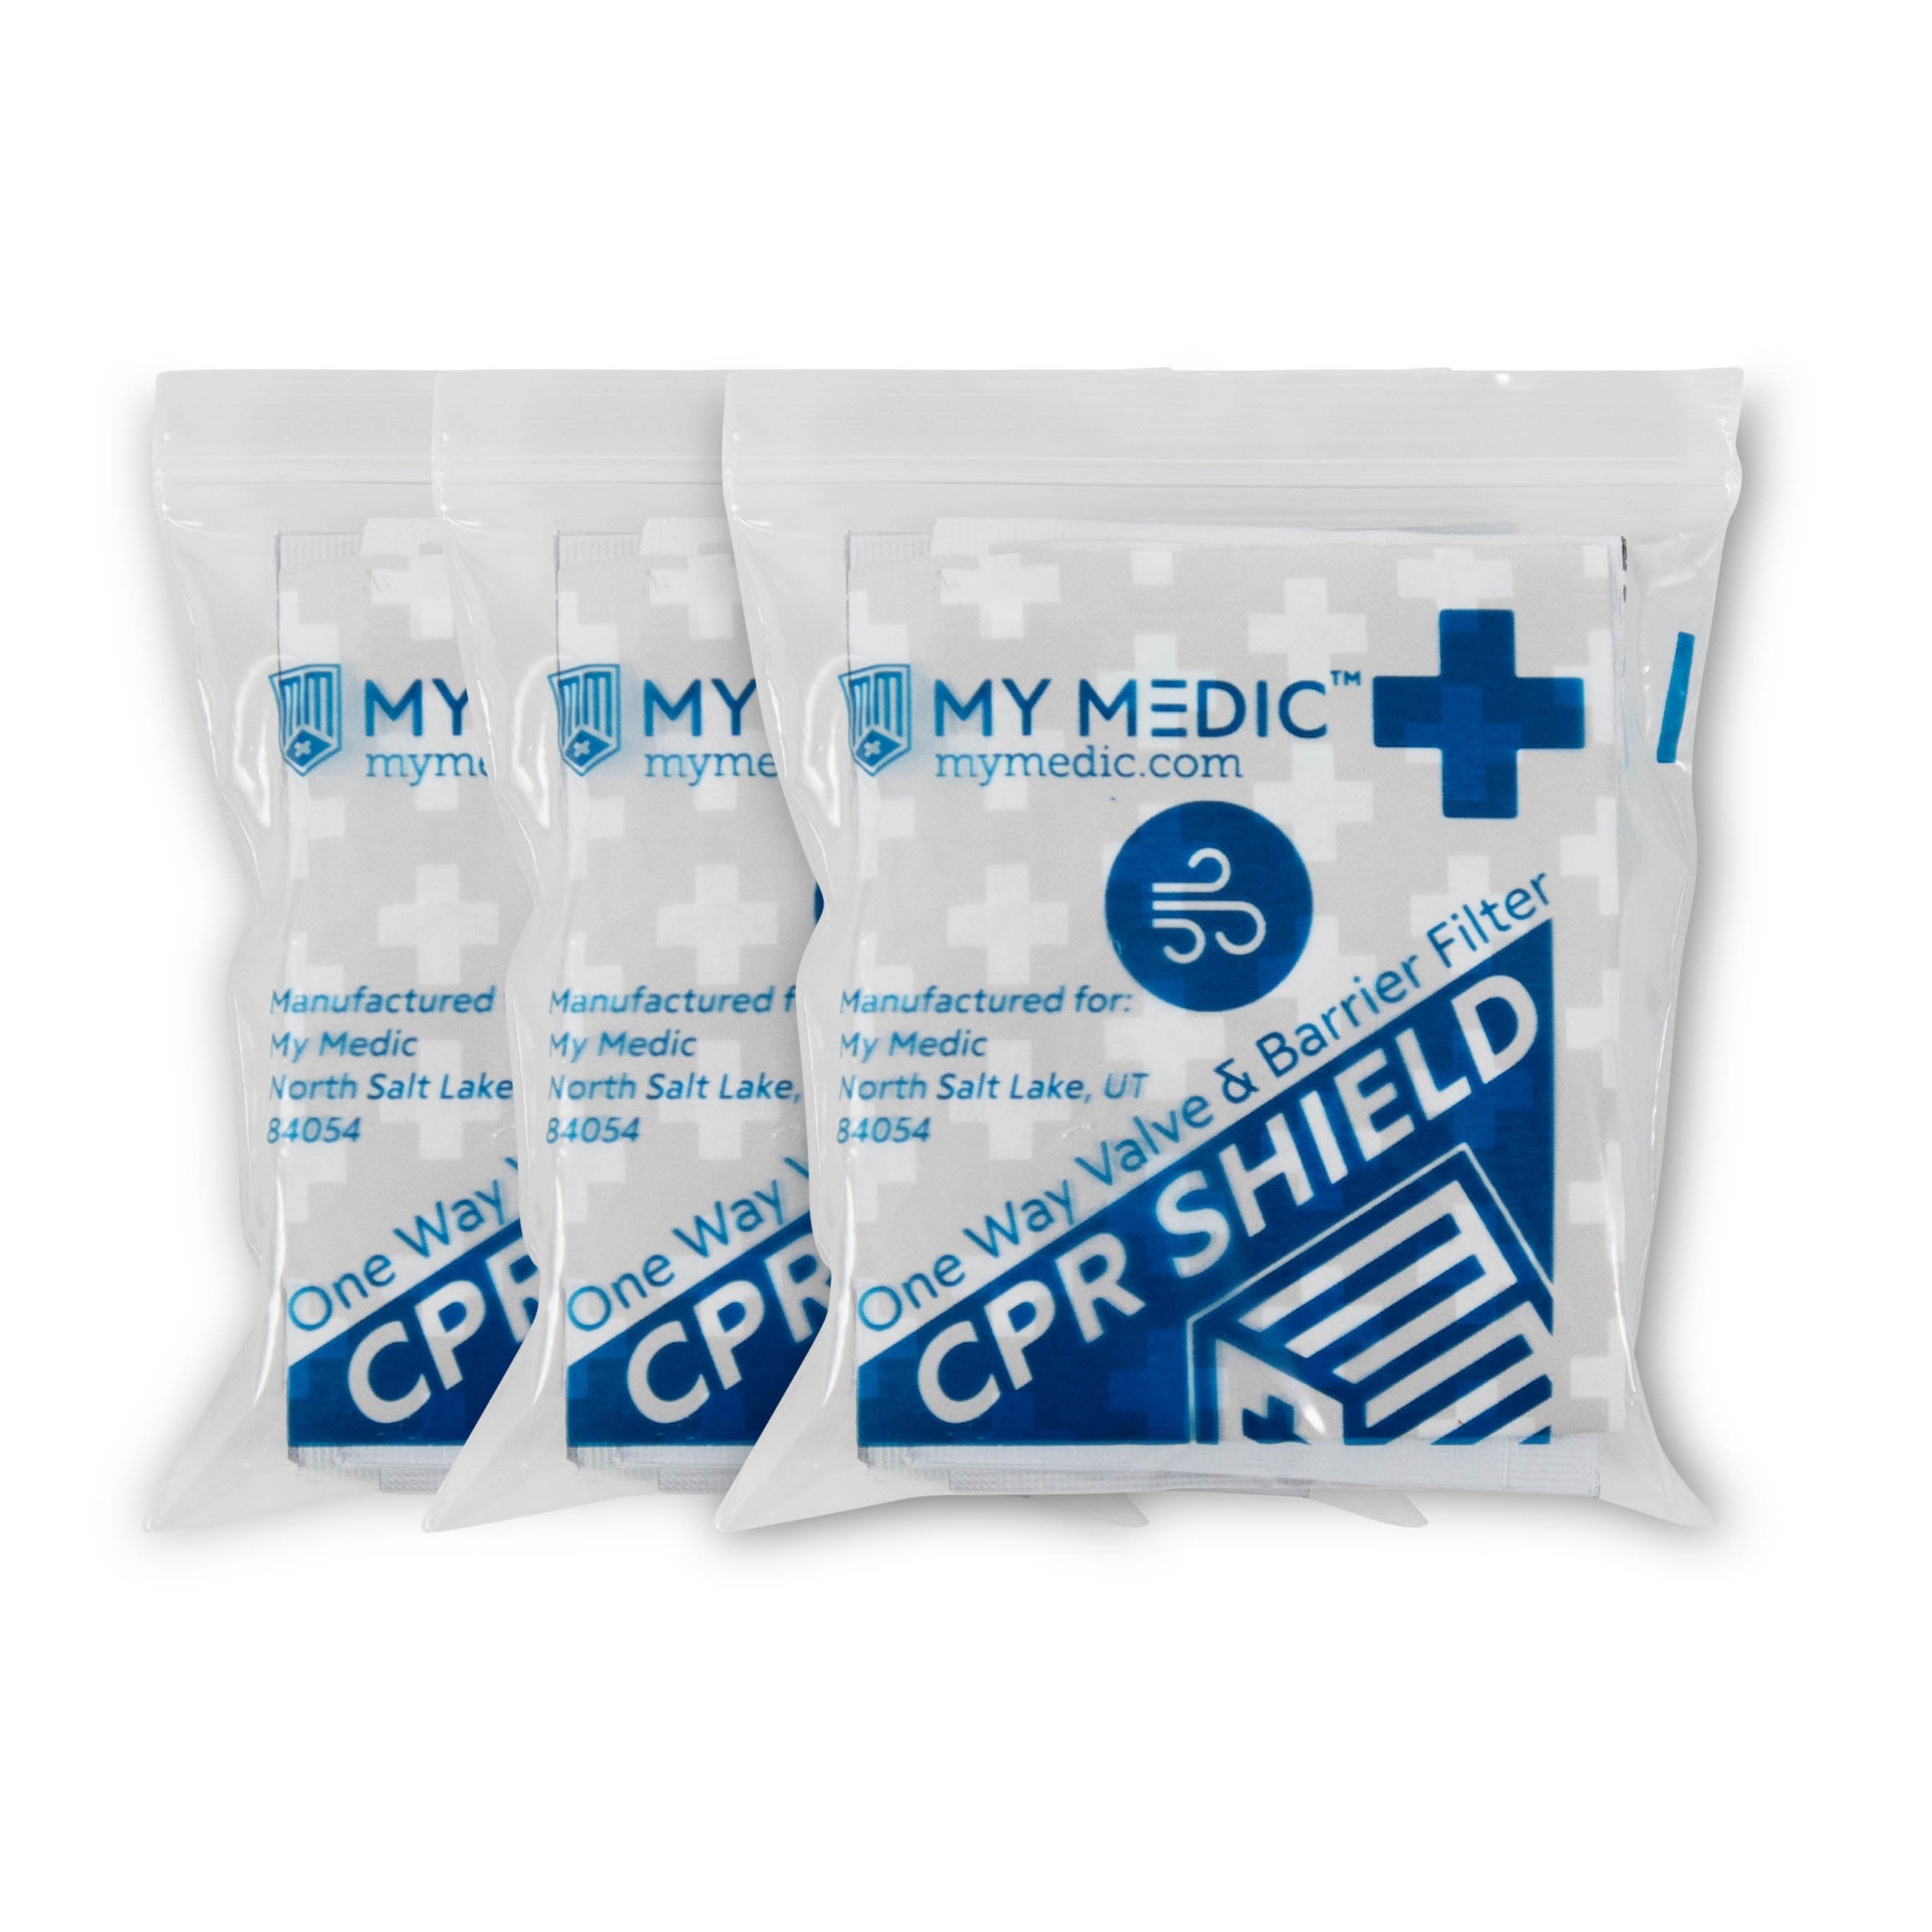  My MedicCPR Shield